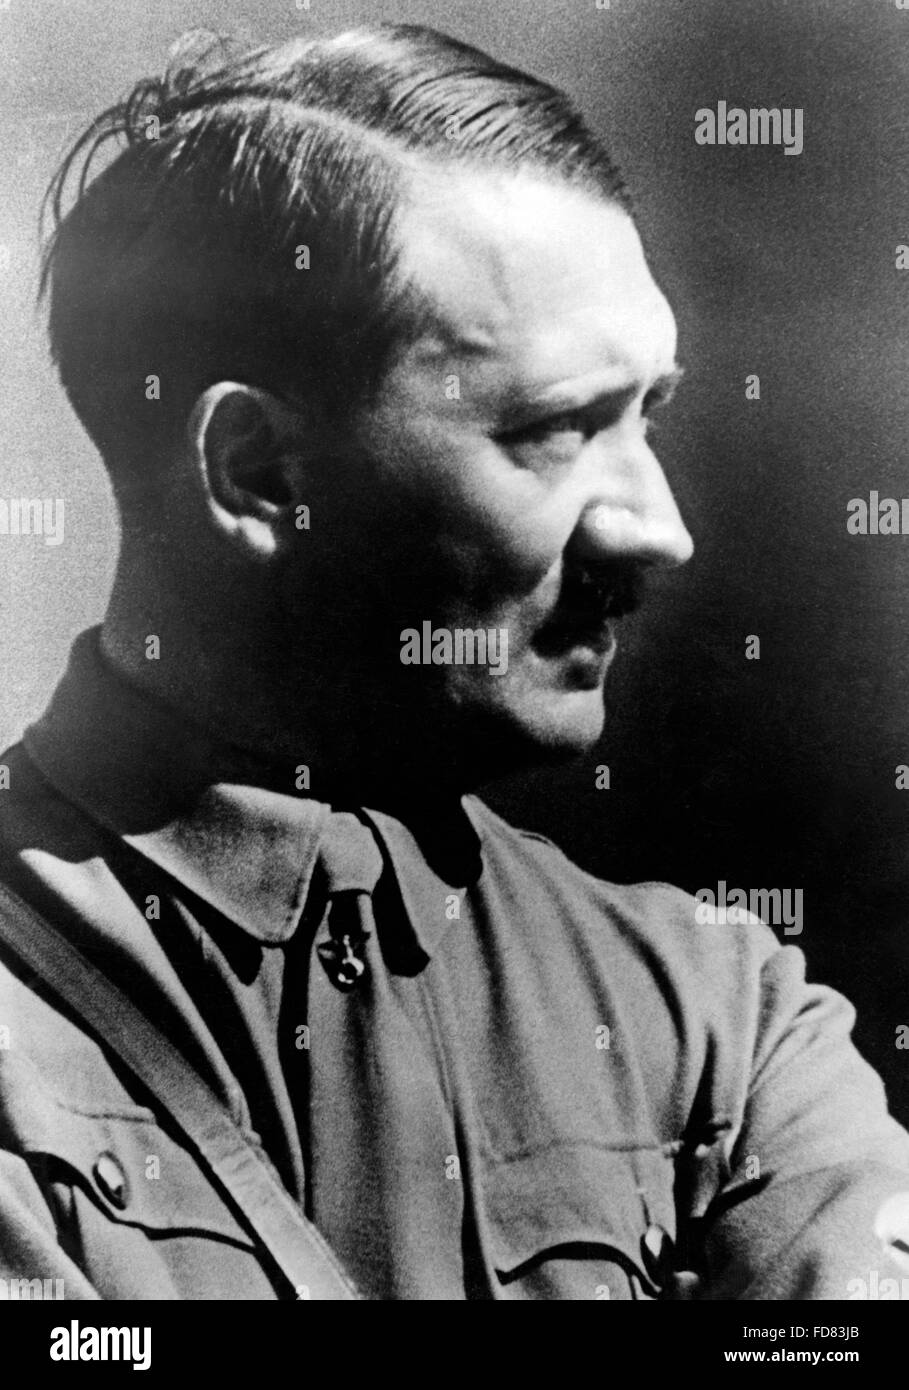 Retrato de perfil de Adolf Hitler, 1936 Foto de stock